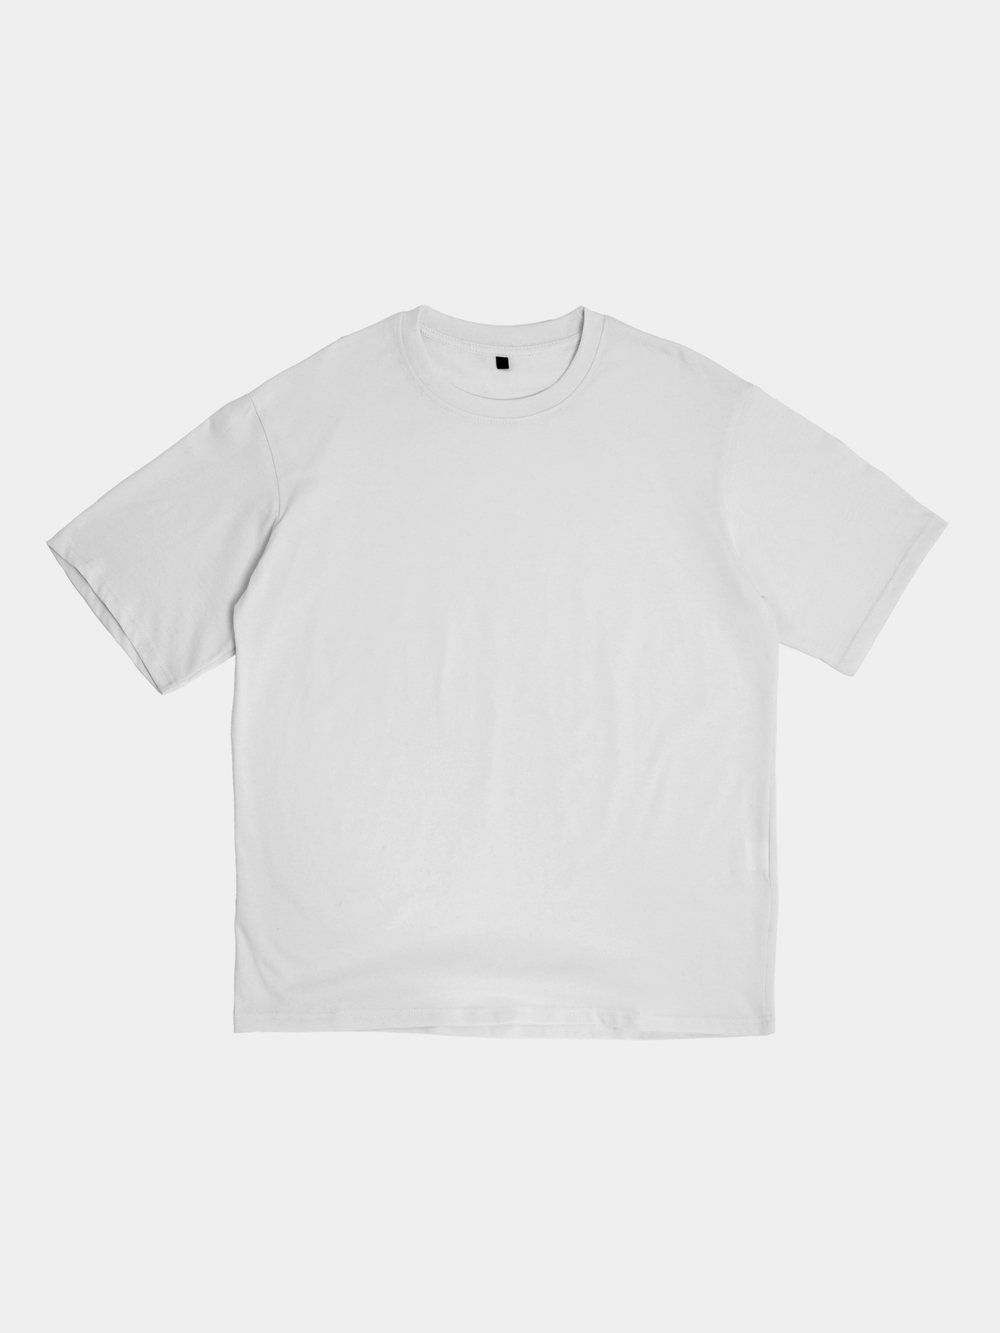 Сток футболка #216 оверсайз (белый), 100% хлопок, плотность 190 гр.